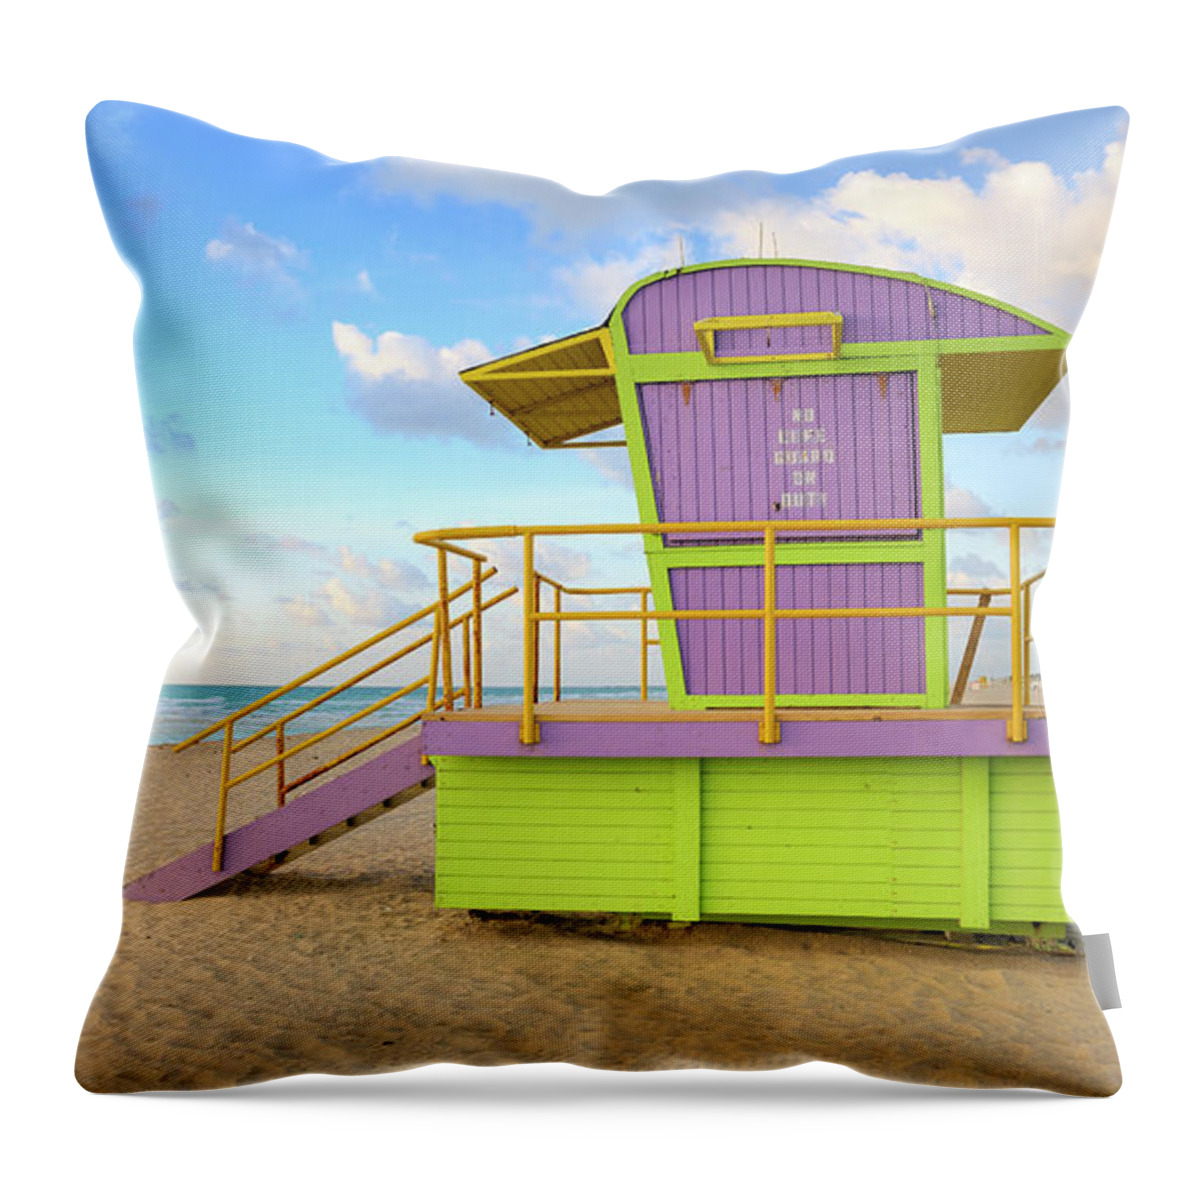 Dawn Throw Pillow featuring the photograph Lifeguard Hut On Miami Beach At Sunrise by Pidjoe